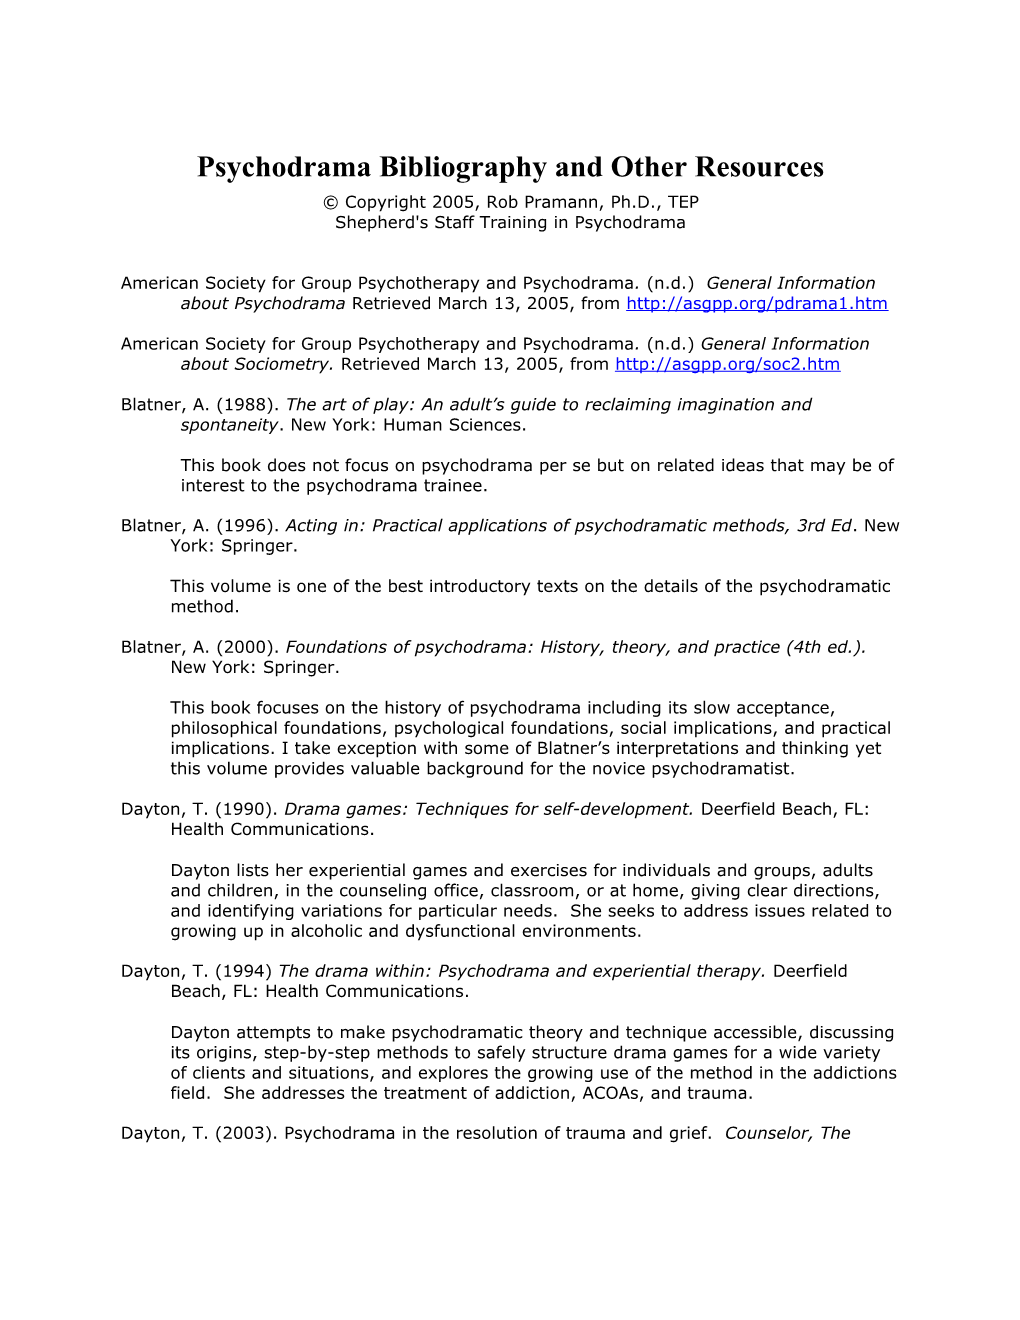 Current Psychodrampa Bibliography